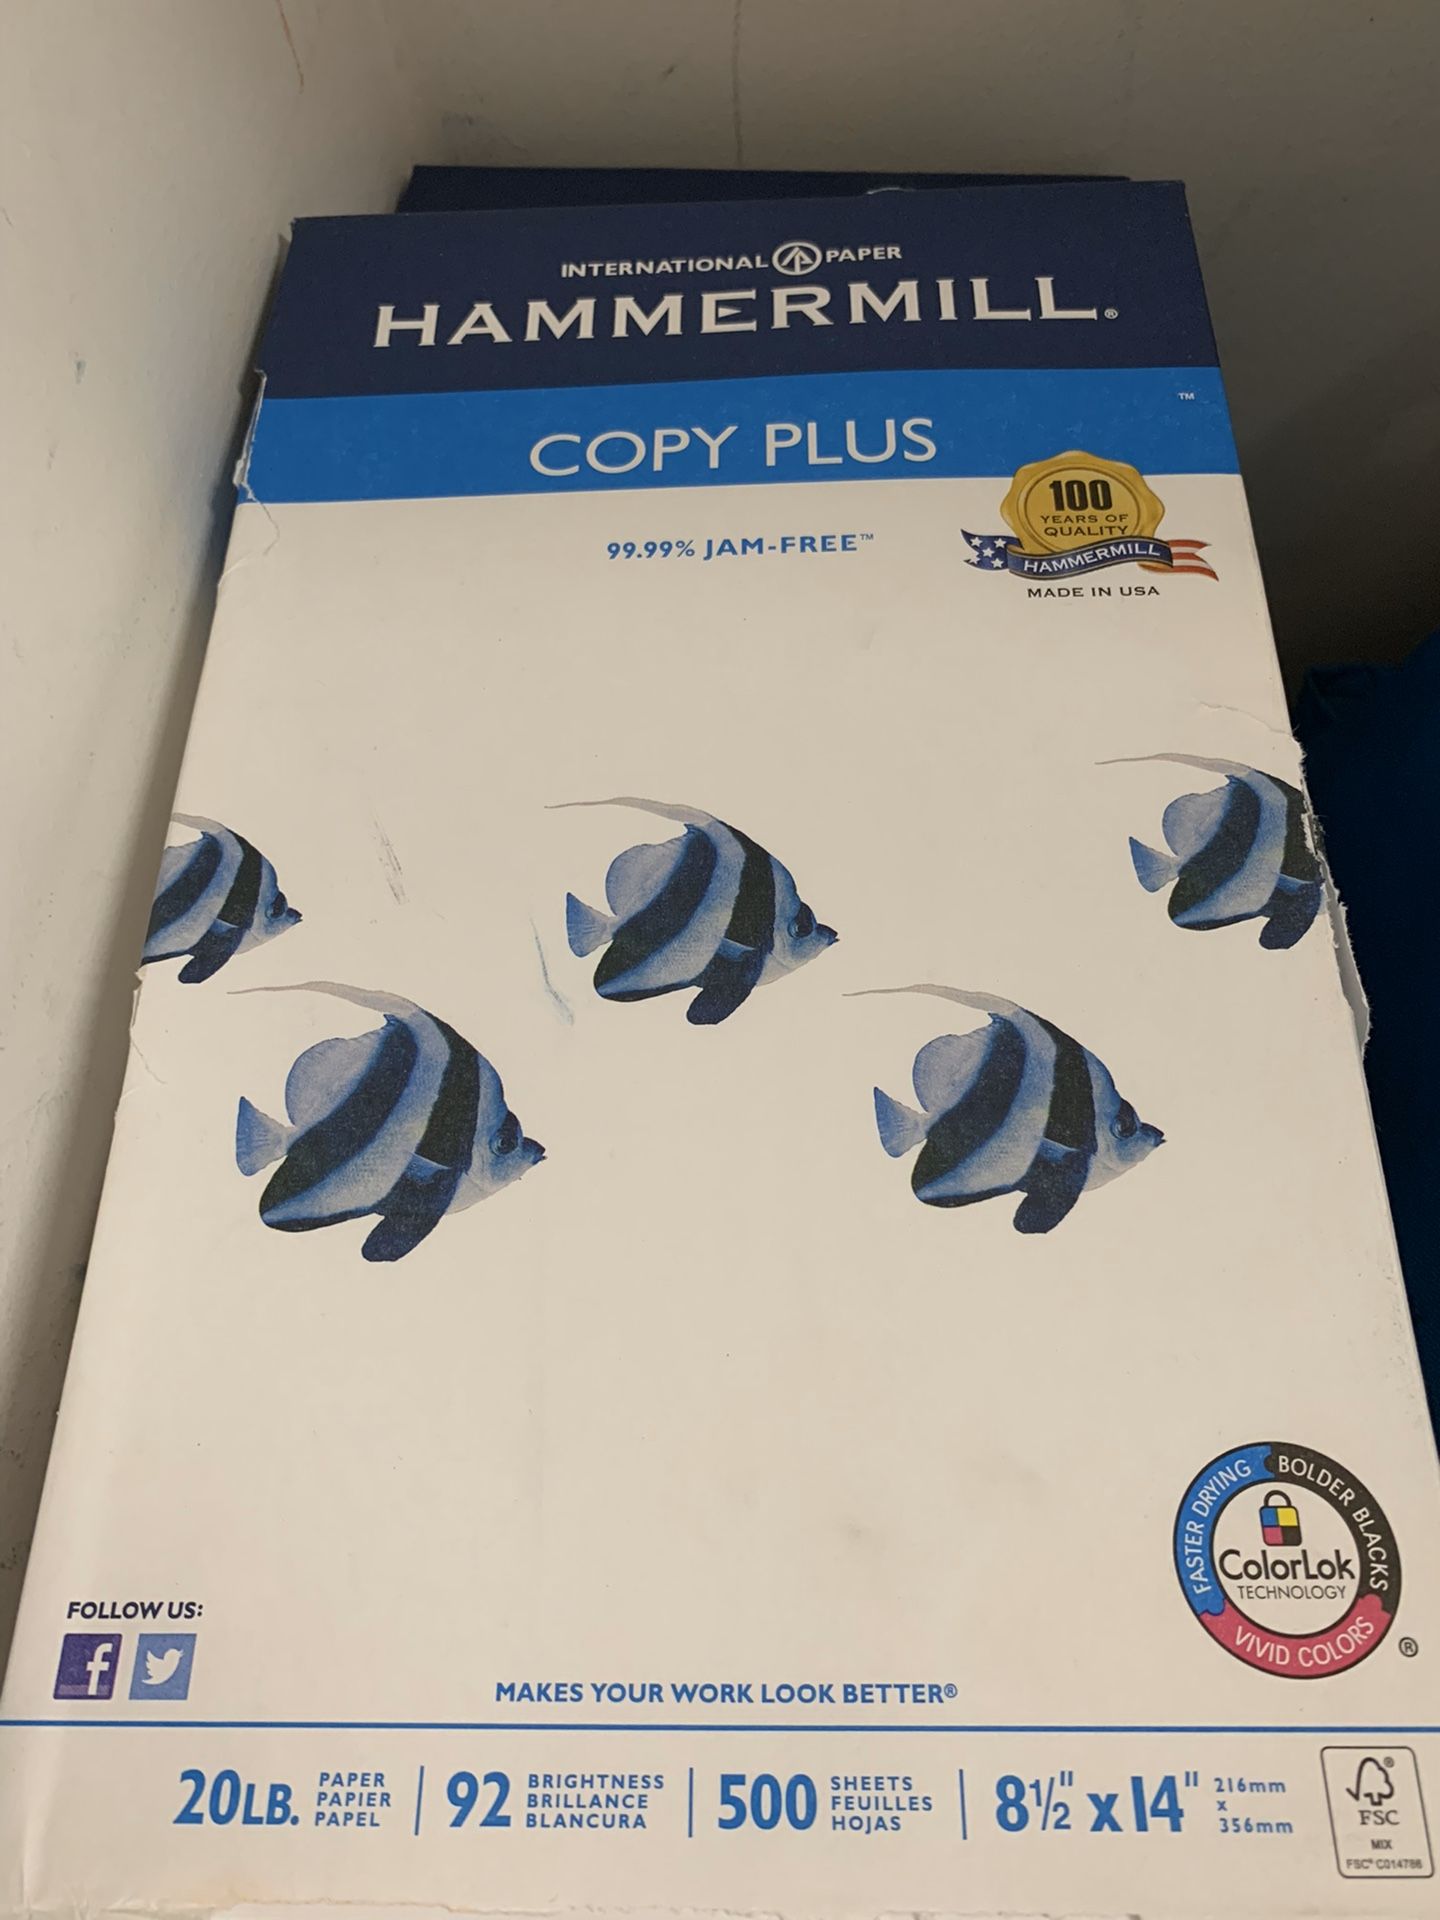 HAMMERMILL Legal copy paper